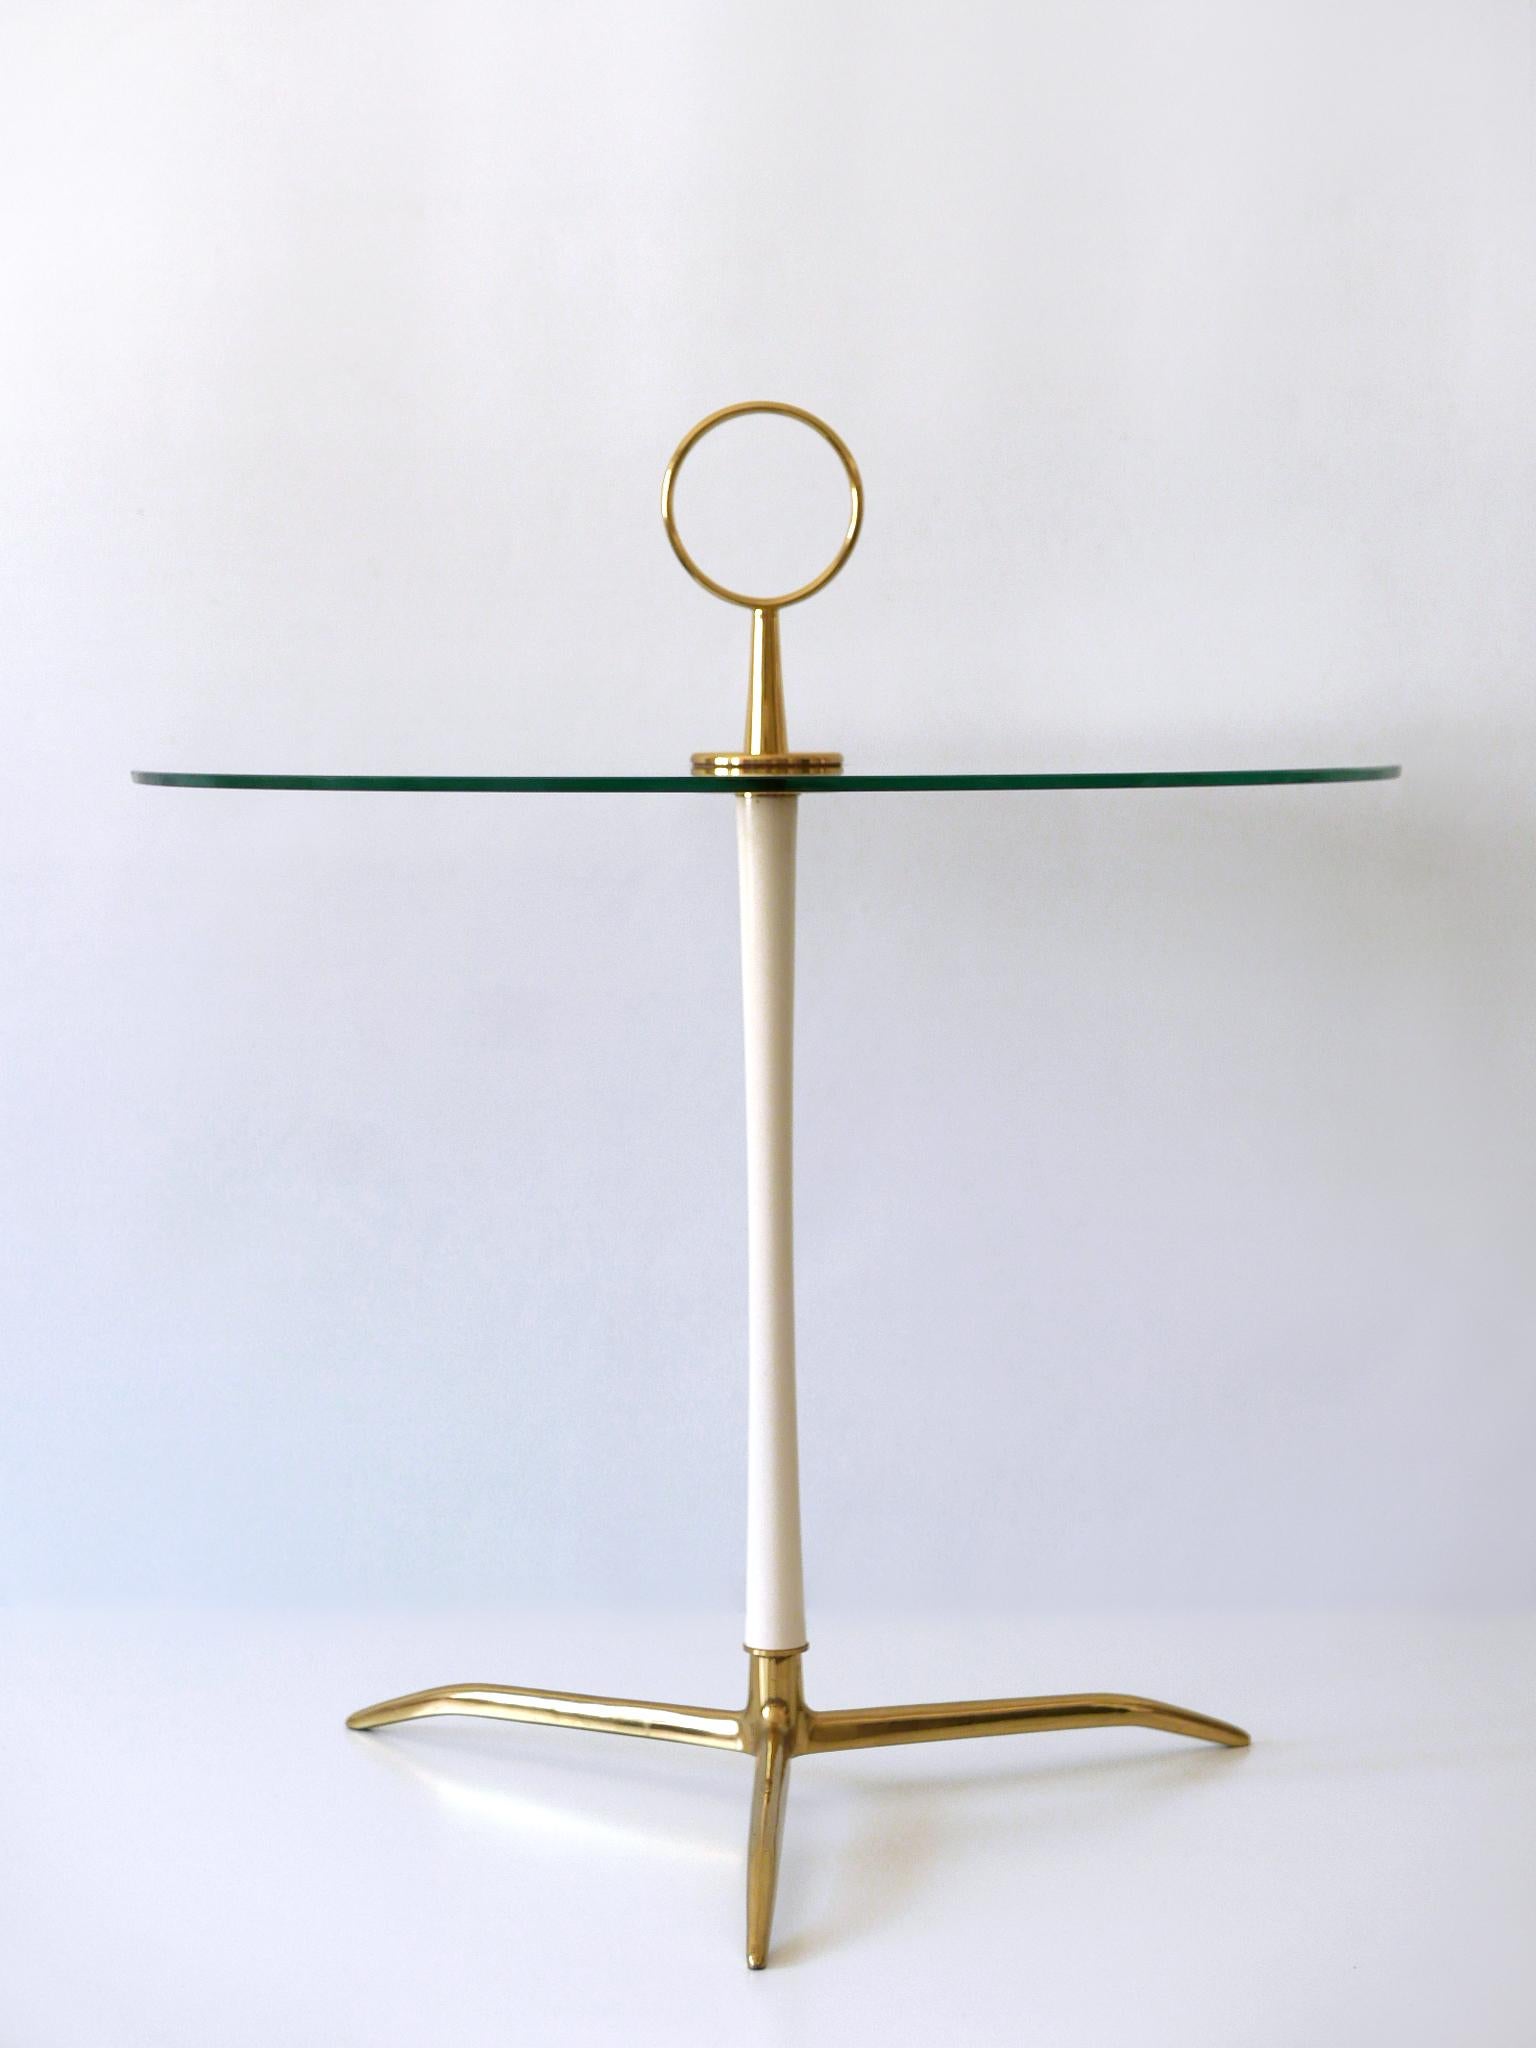 Elegant Mid-Century Modern Side Table by Vereinigte Werkstätten Germany 1950s For Sale 3